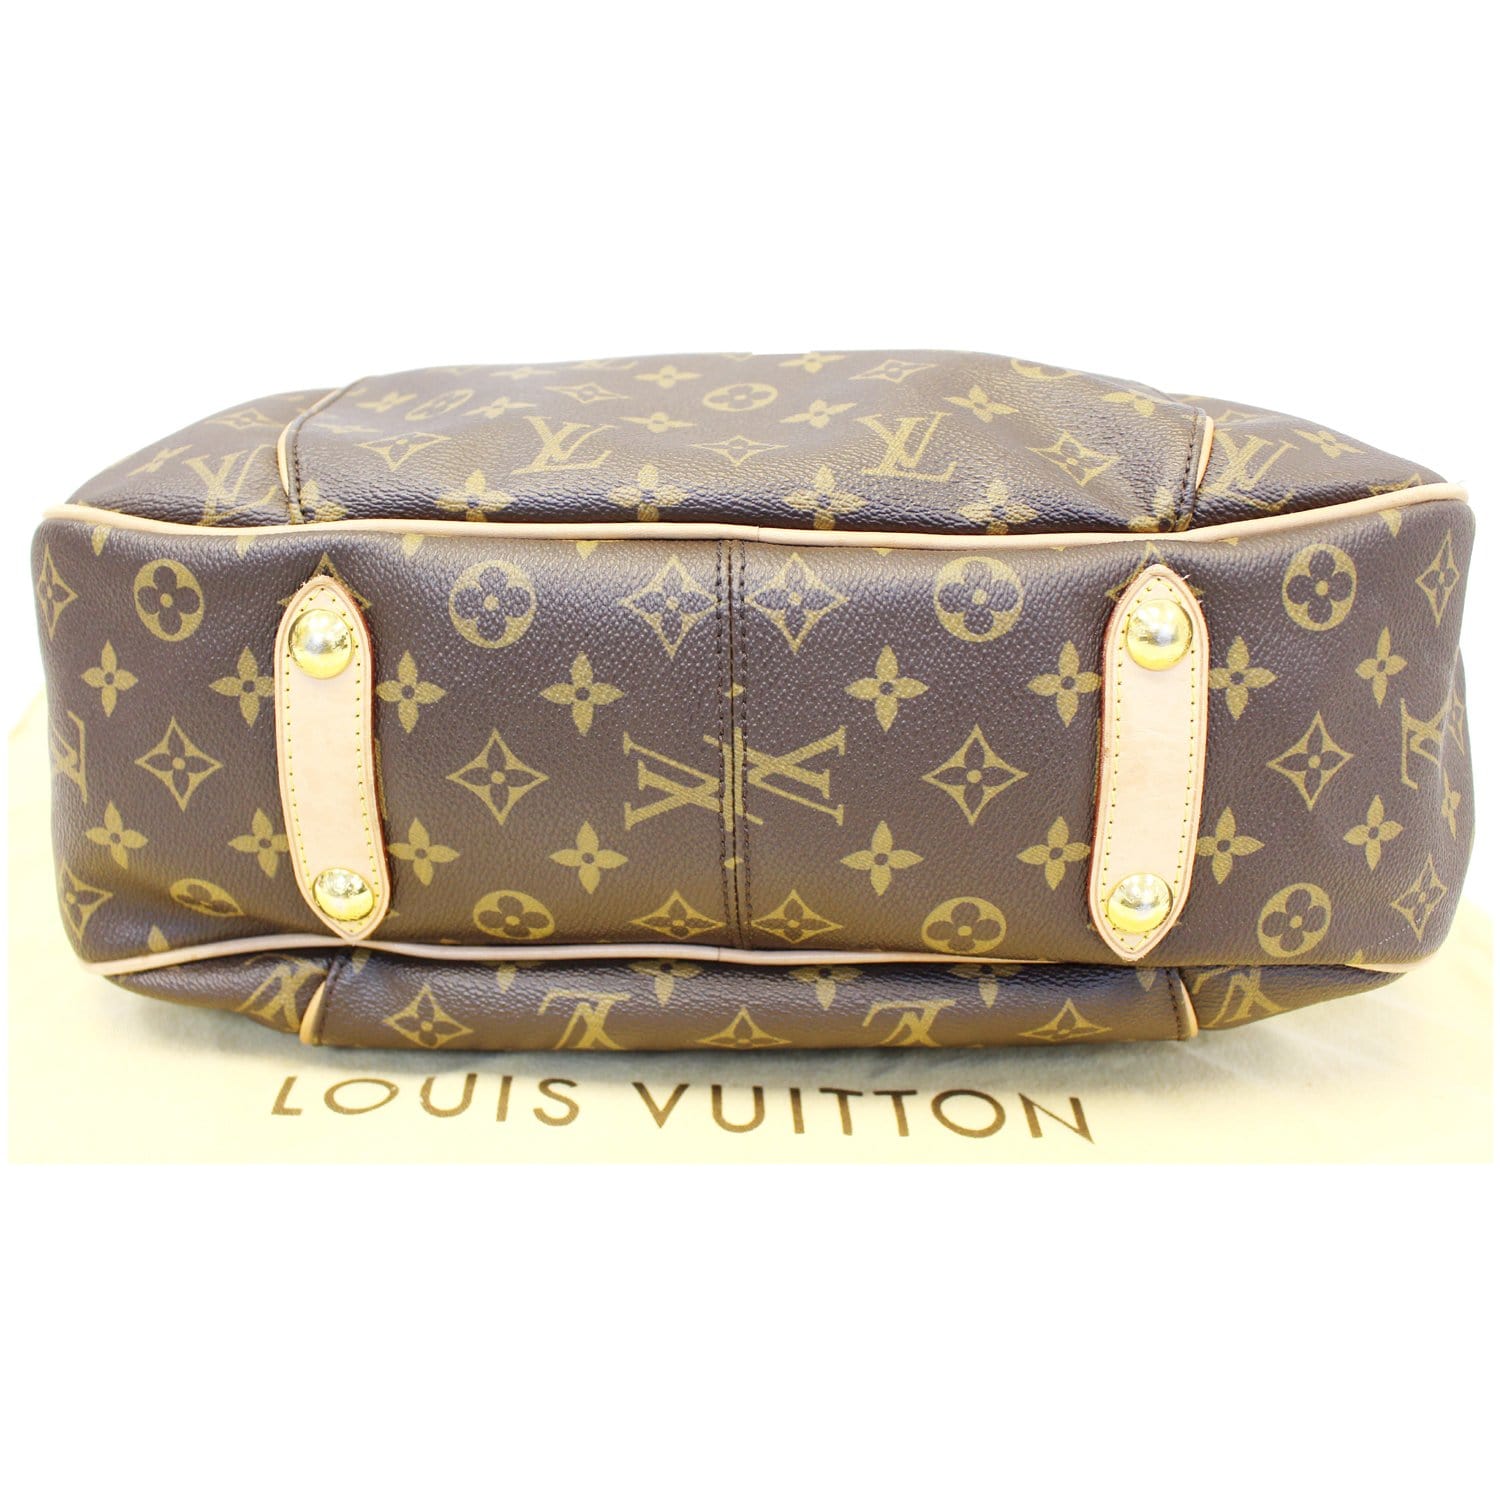 Louis Vuitton Galliera Medium Model Shopping Bag